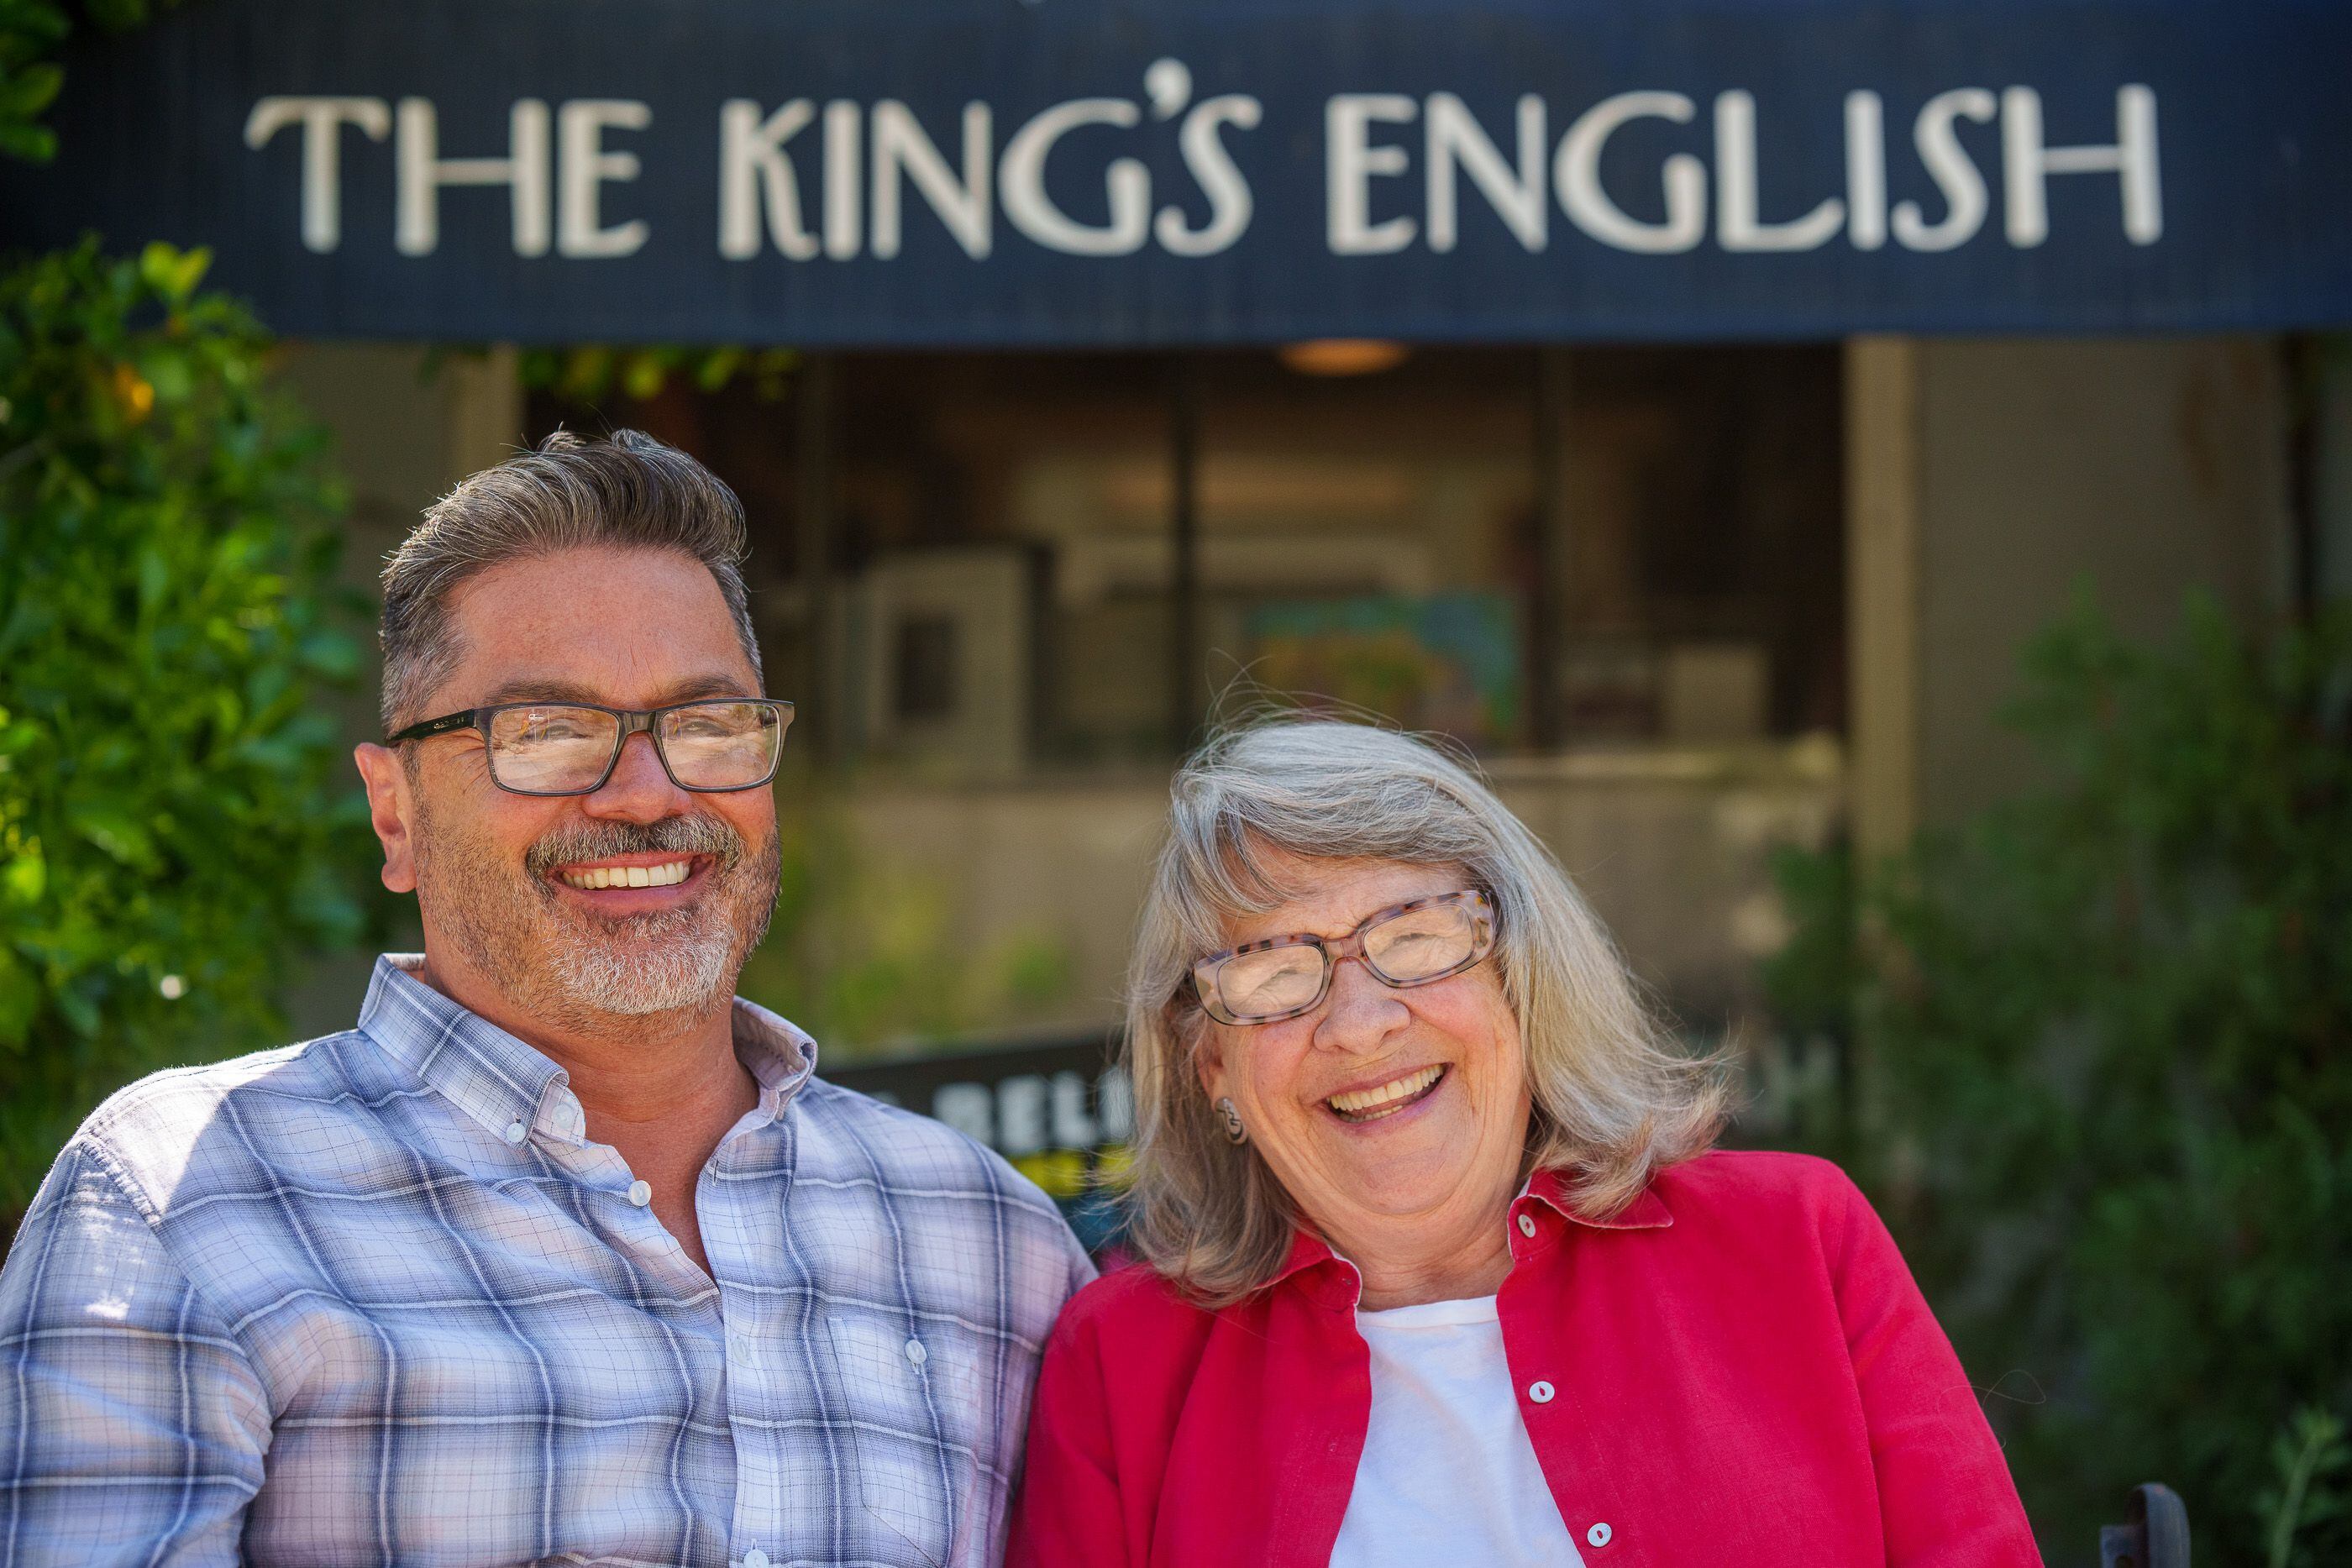 King's English Bookshop (@kingsenglishbookshop) • Instagram photos